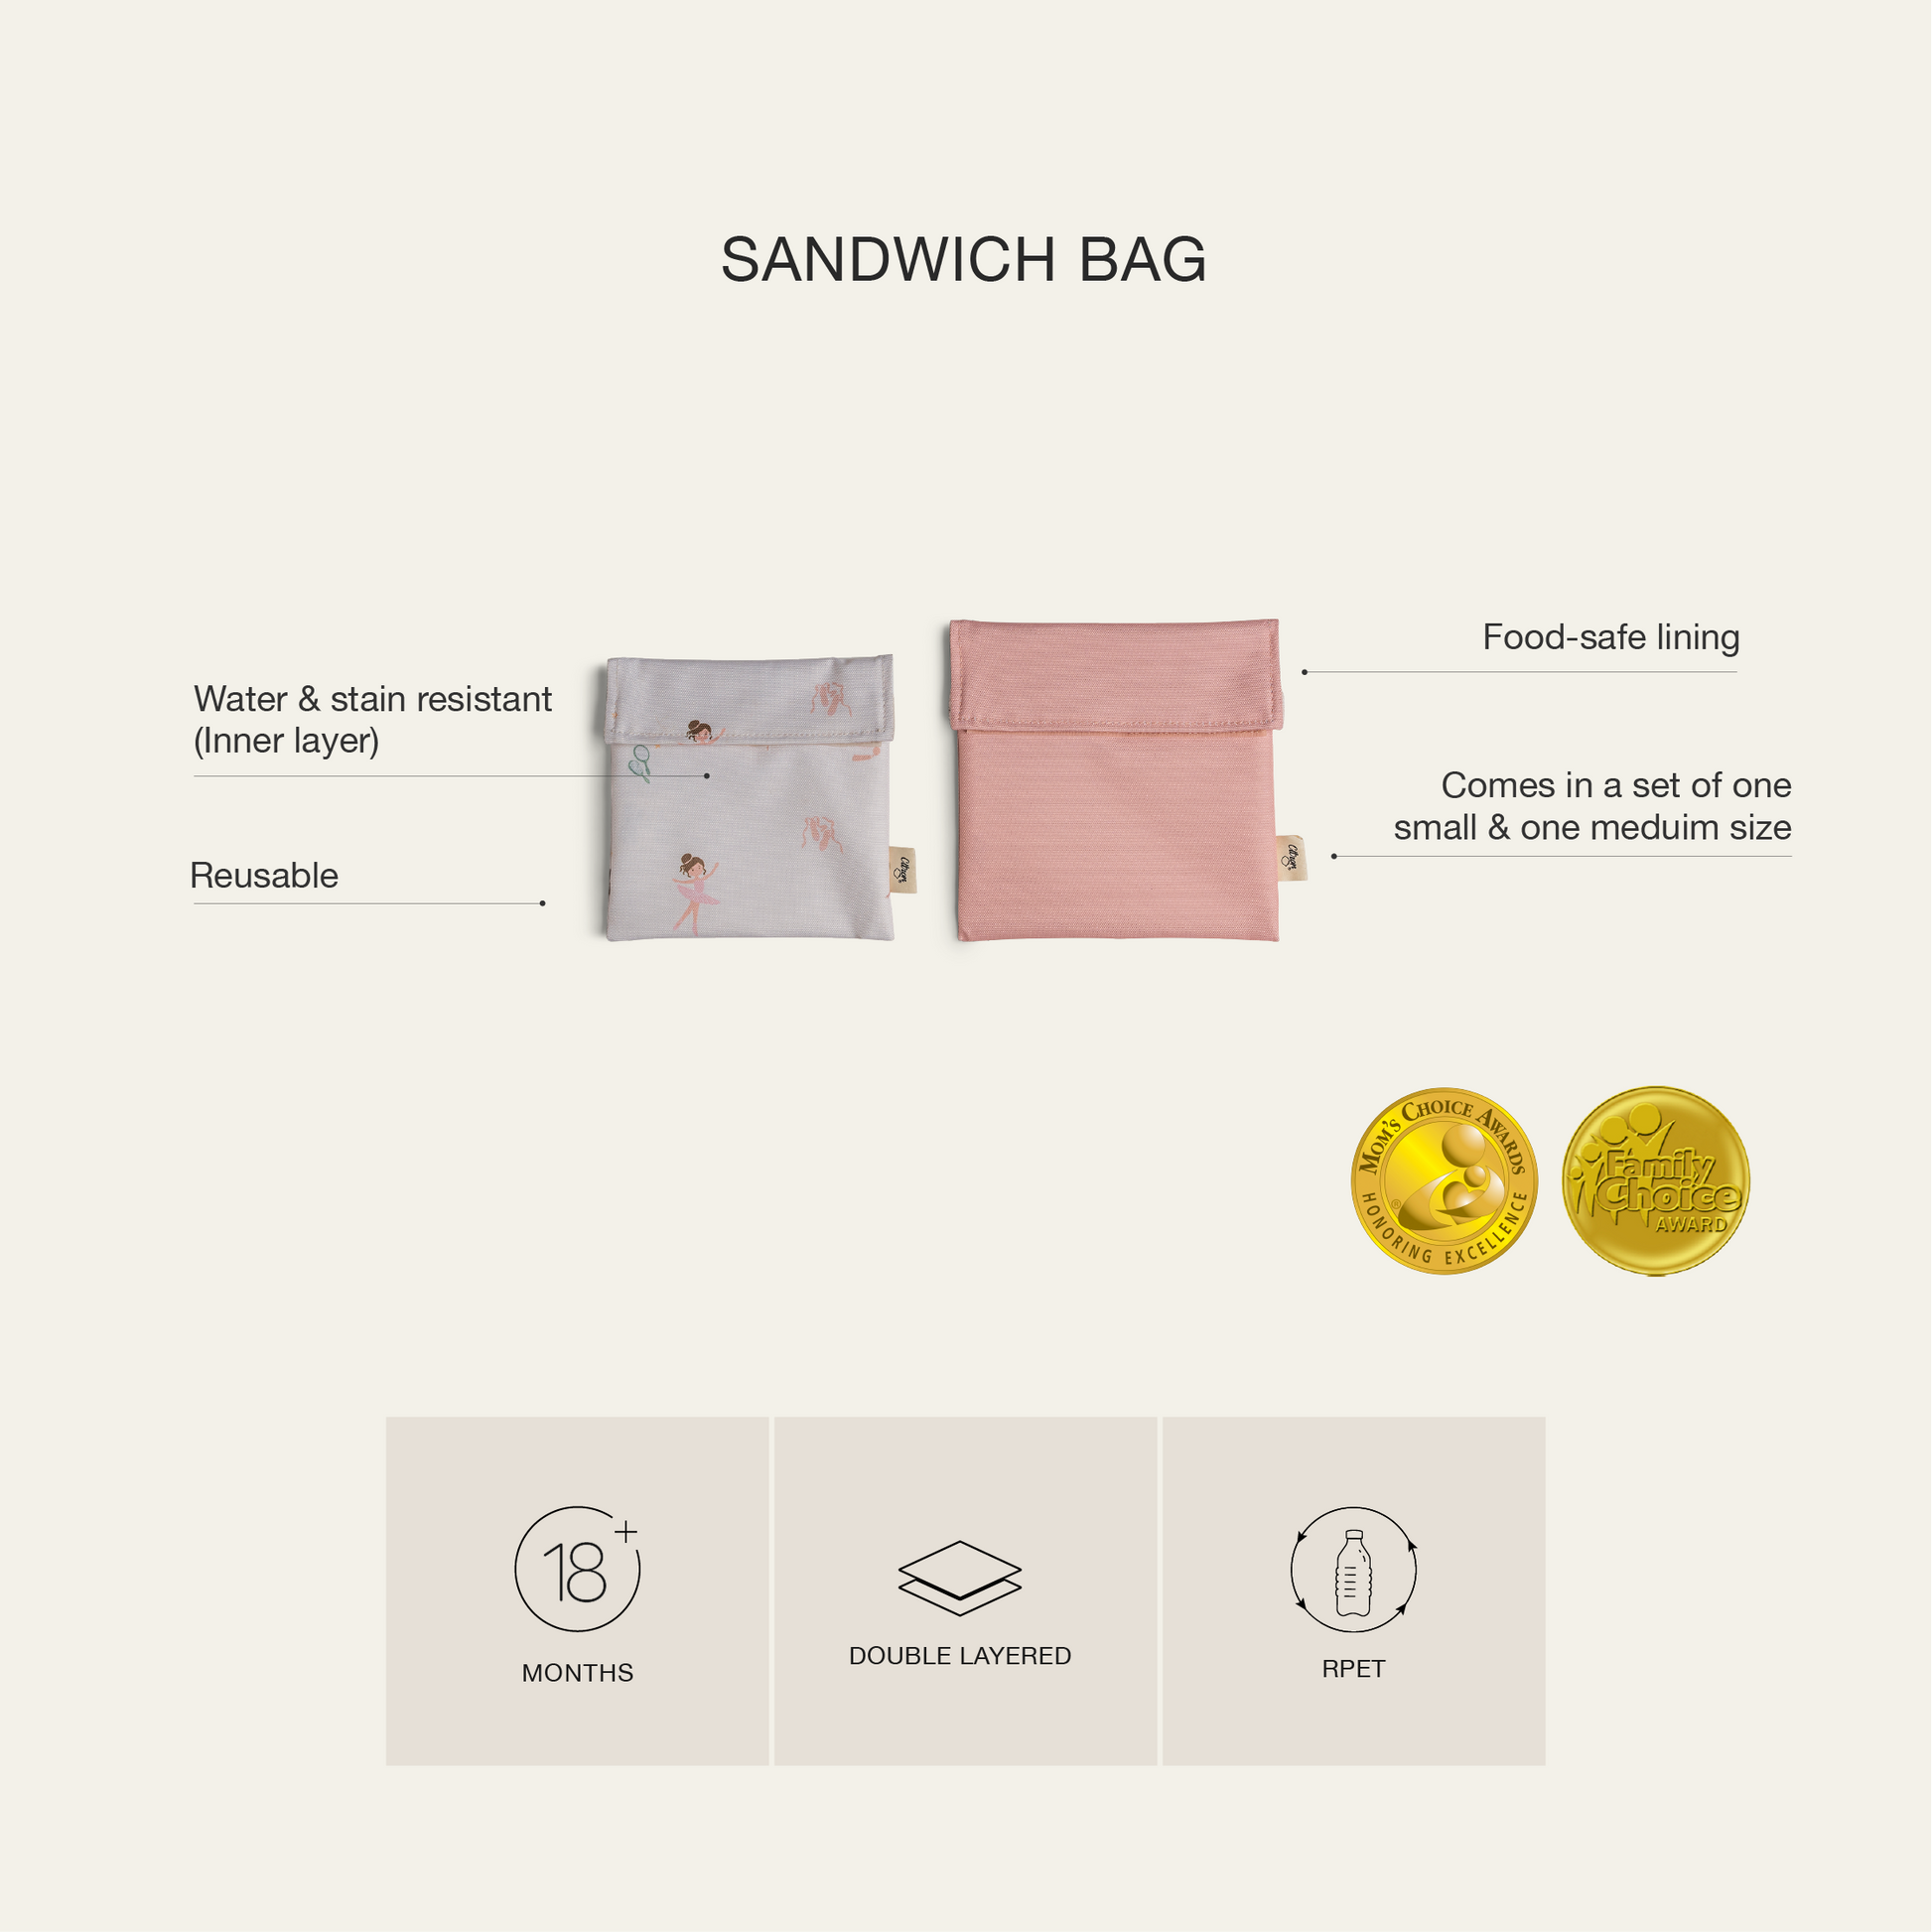 Citron Reusable Sandwich Bag Set of 2 - Ballerina/Blush Pink - Laadlee